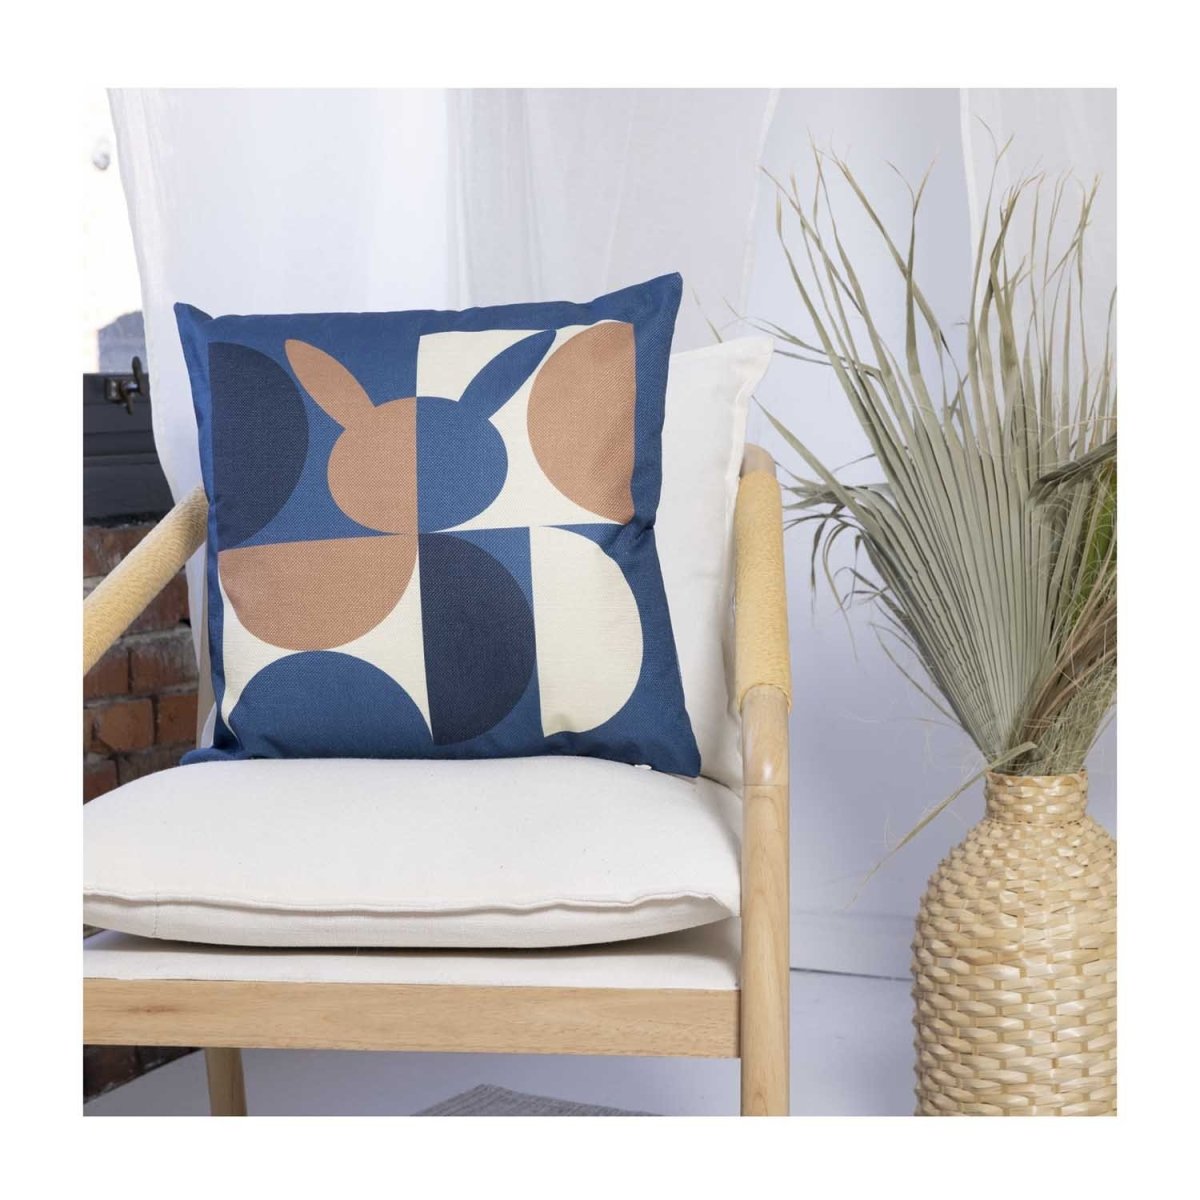 Nooks - Geometric Cushion Covers, Set of 5